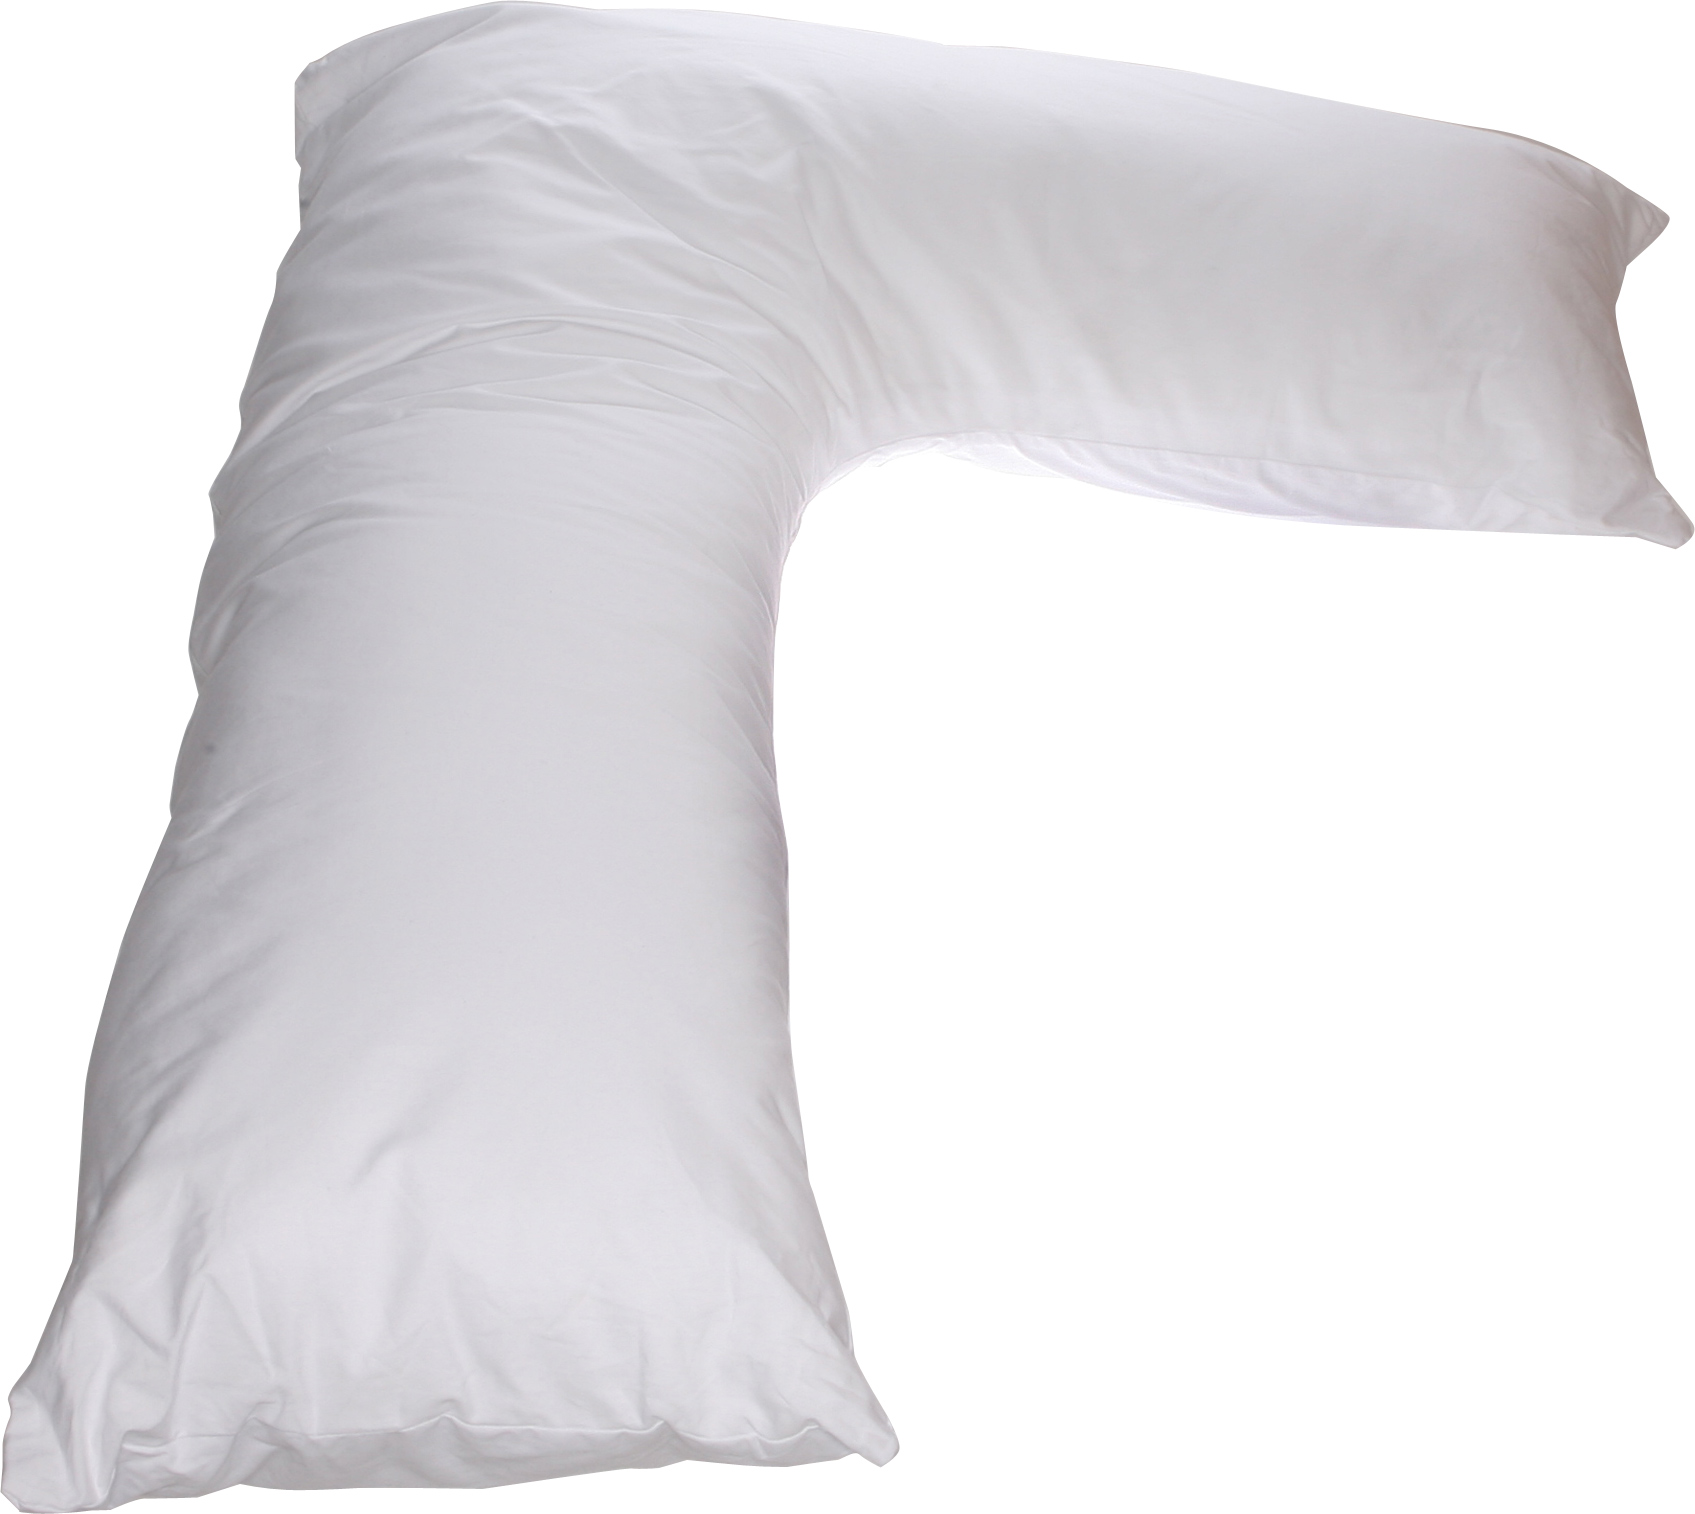 J Shaped Full Body Length Pillow for Great Side Sleeping Black BWGHBH Comfort Body Pillow